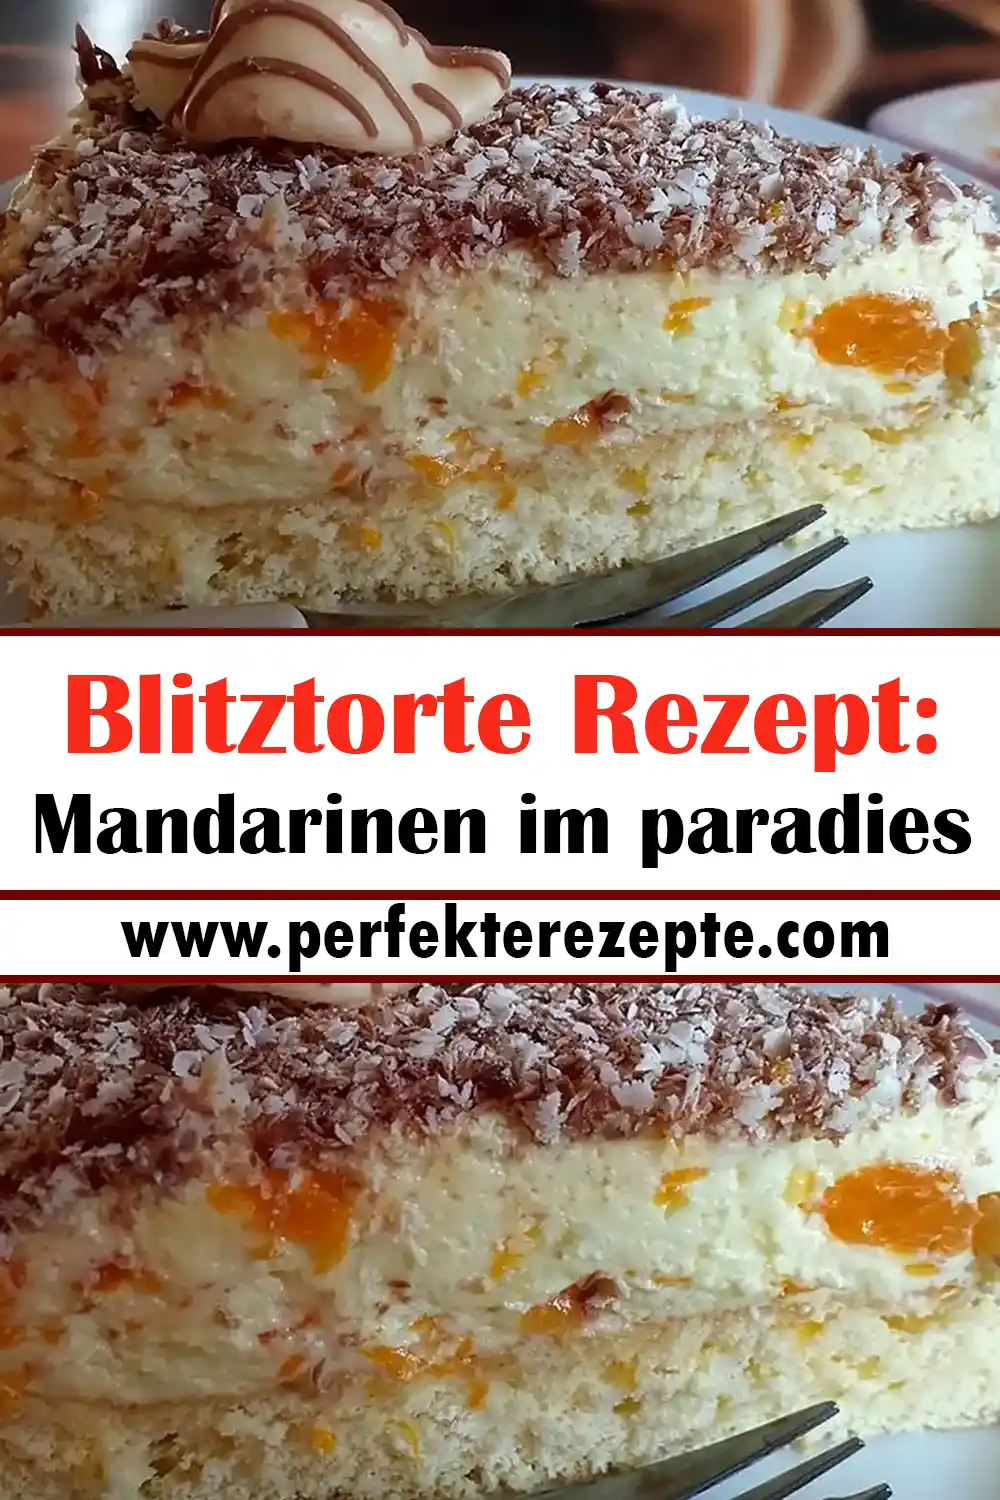 Blitztorte Rezept: Mandarinen im paradies